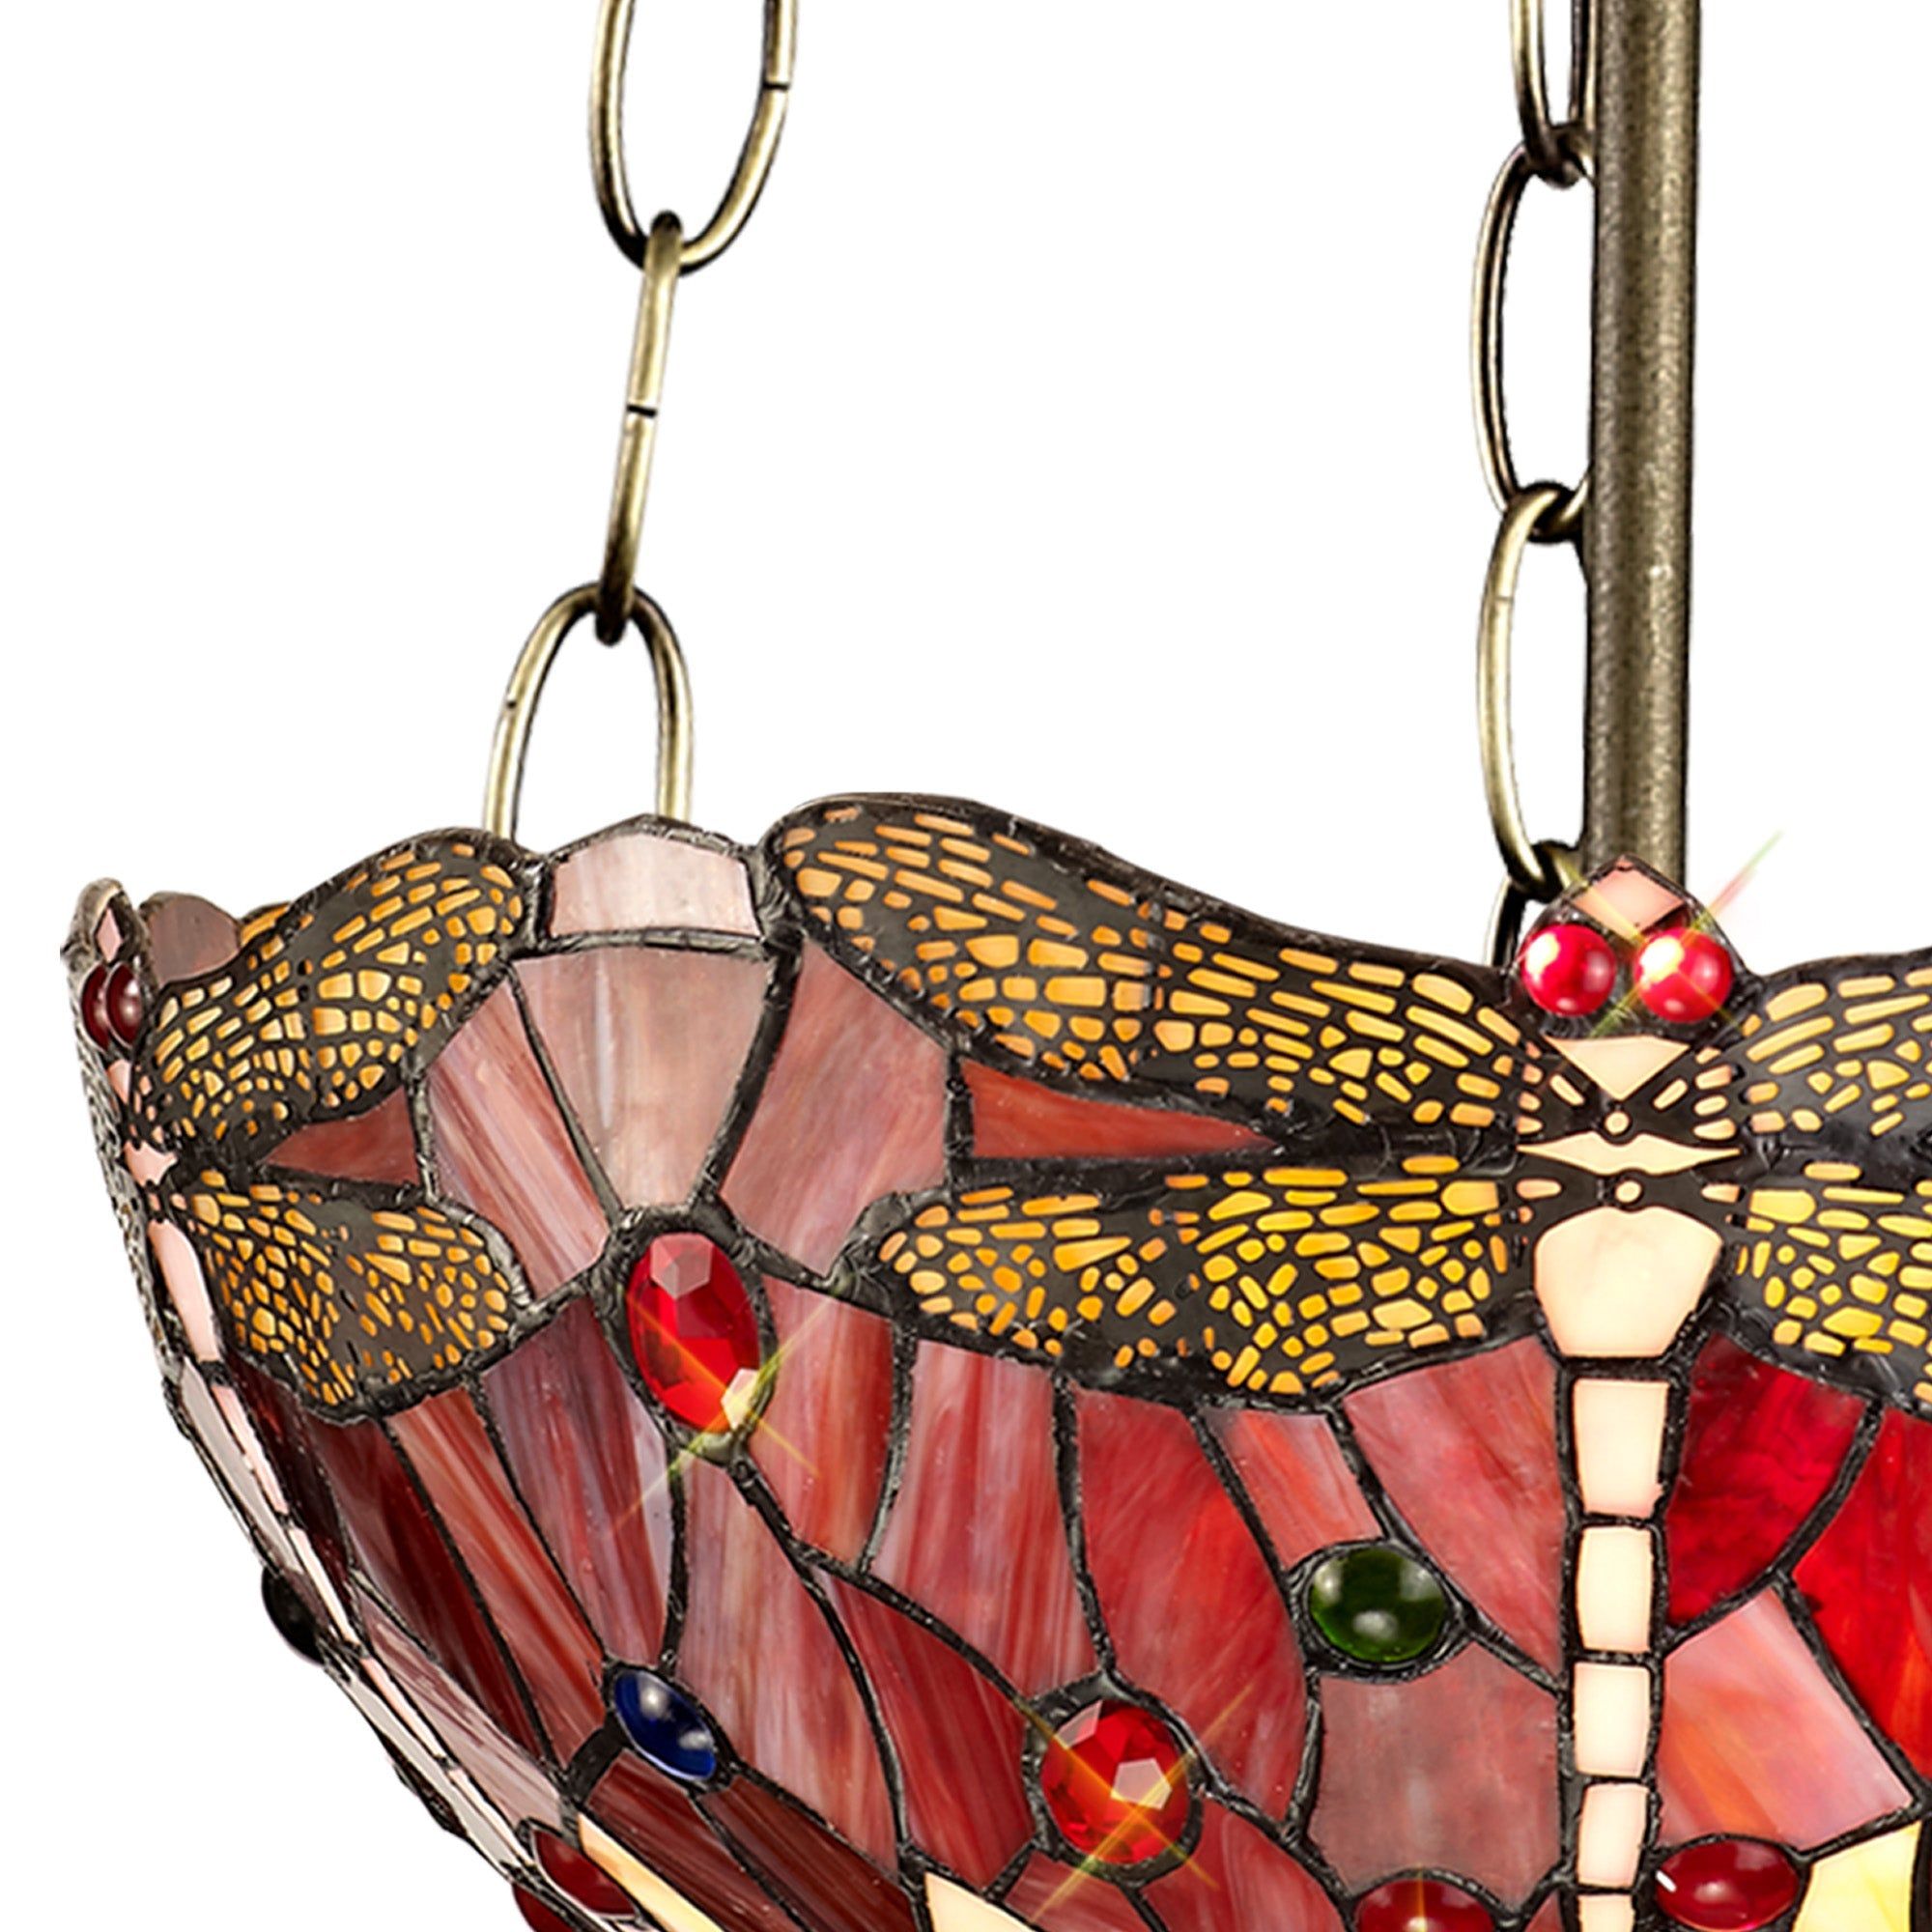 Nuflur 3 Light Uplighter Pendant E27 With 30cm Tiffany Shade,  Antique Brass